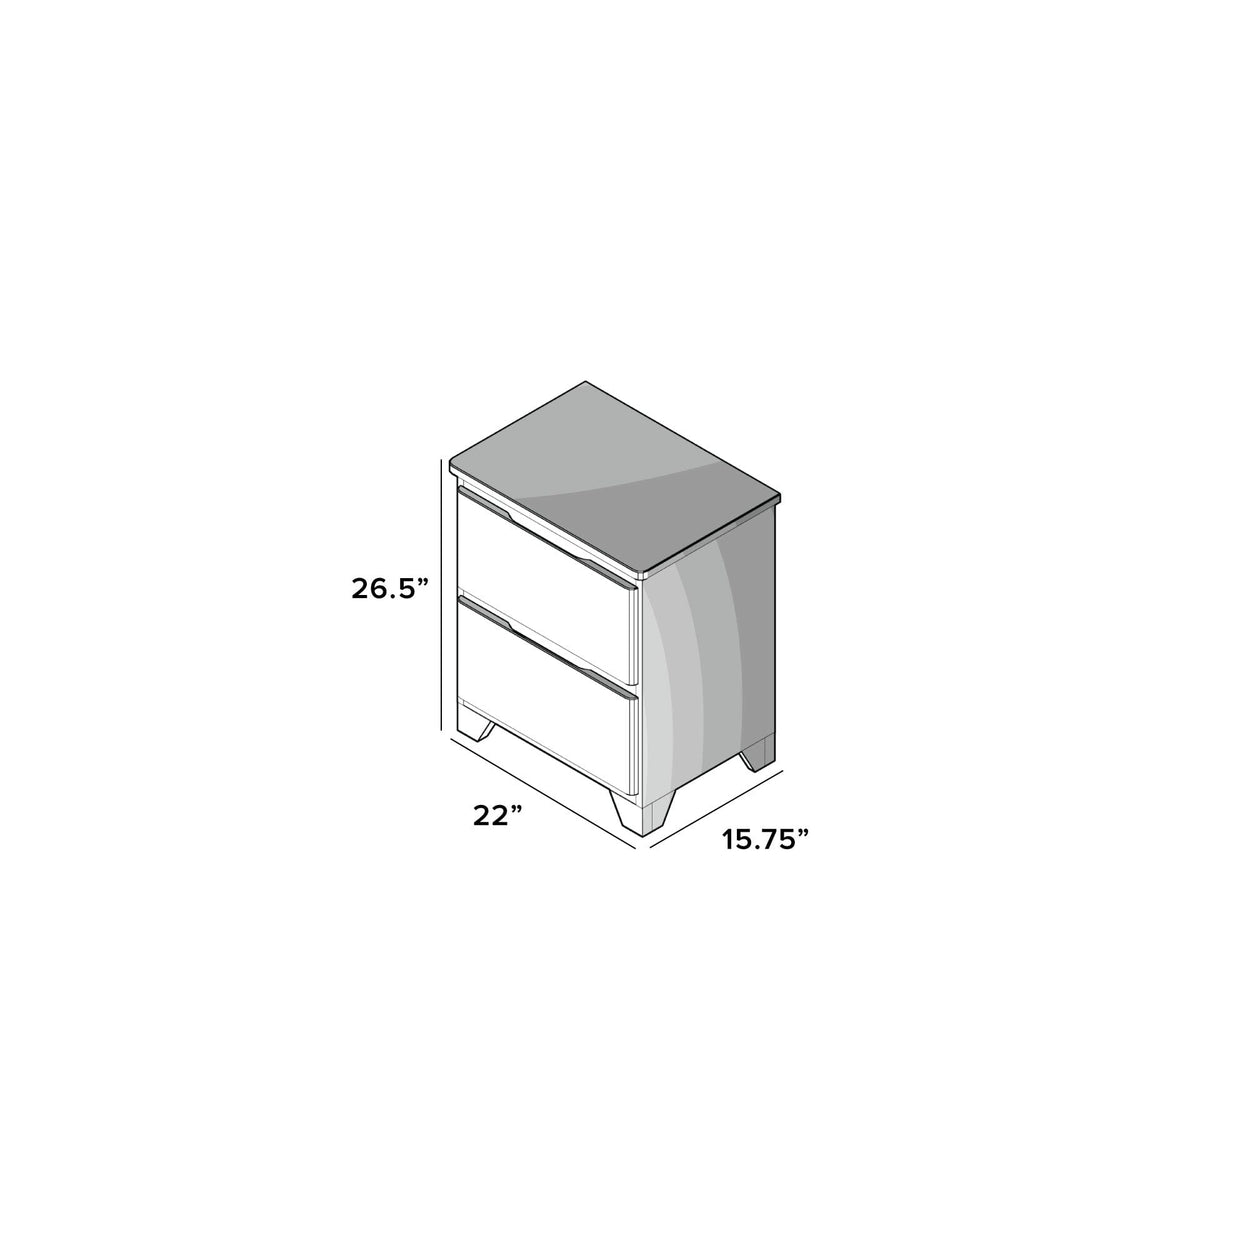 190002-182 : Furniture K/D 2 Drawer Nightstand w/ metal drawer glides (22"L x 15.75"W x 26.25"H), White Wash